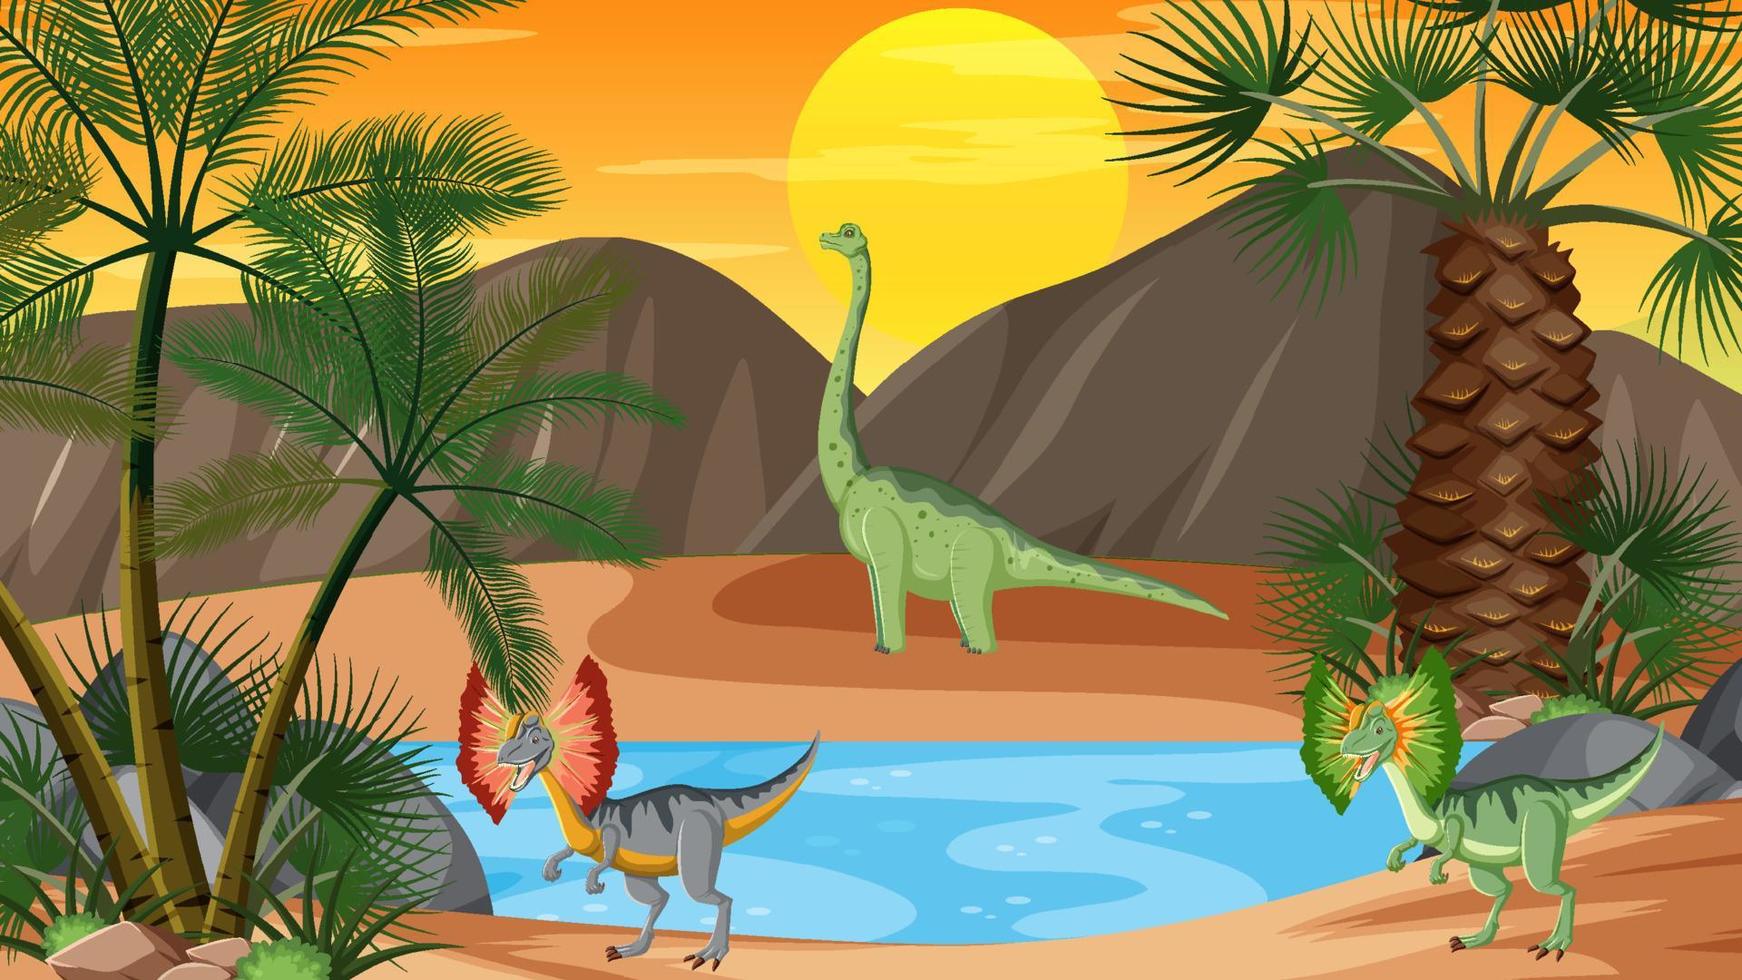 Prehistoric forest background with dinosaur cartoon vector